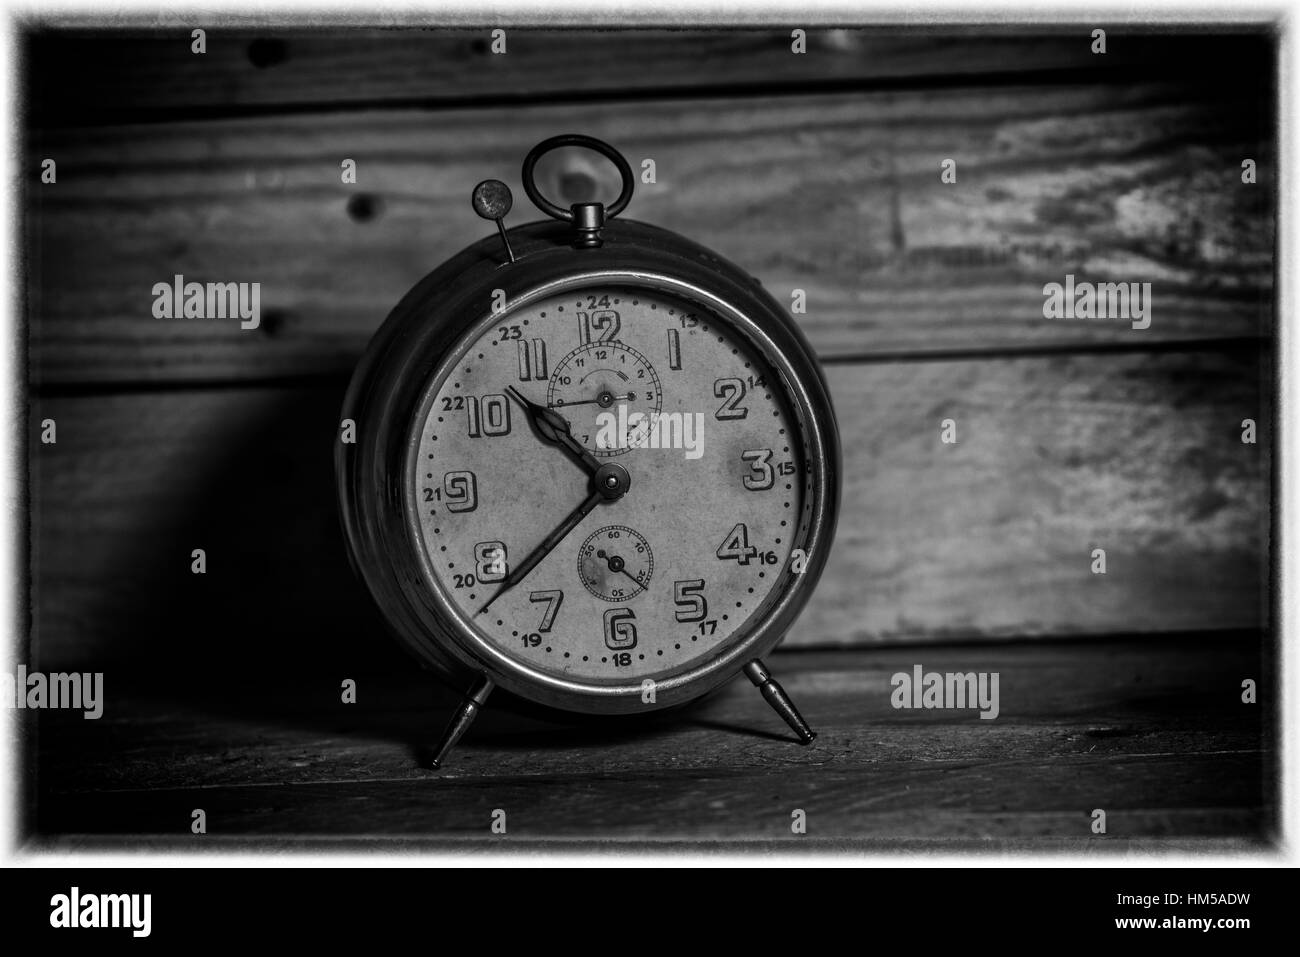 Antique Mechanical Alarm Clock Irving